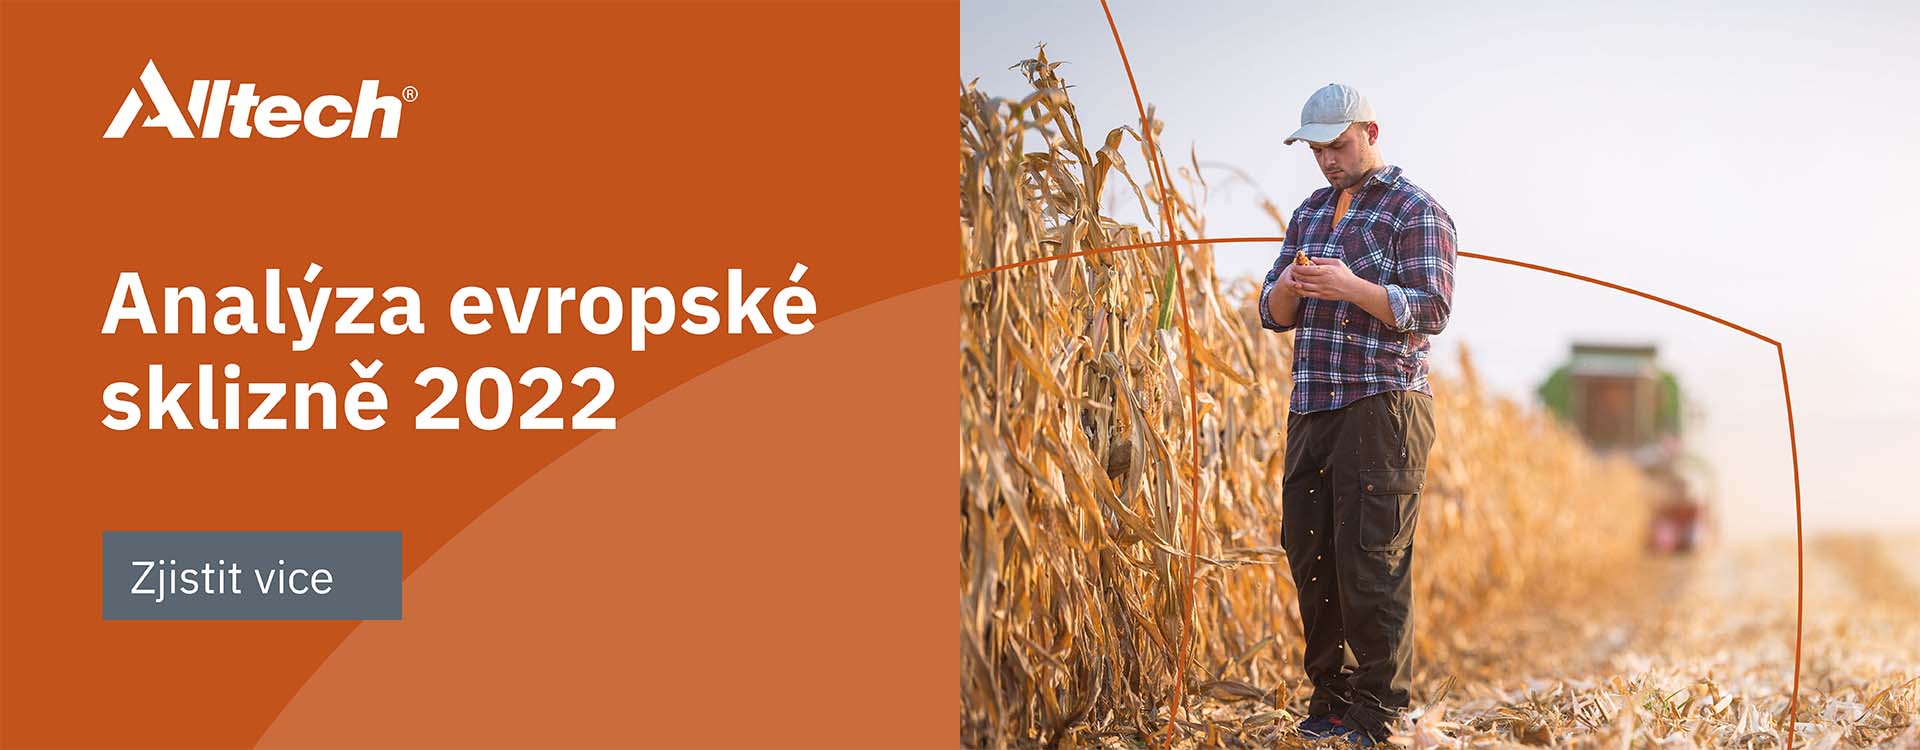 2022 European Harvest Analysis Hero Image - Czech Republic